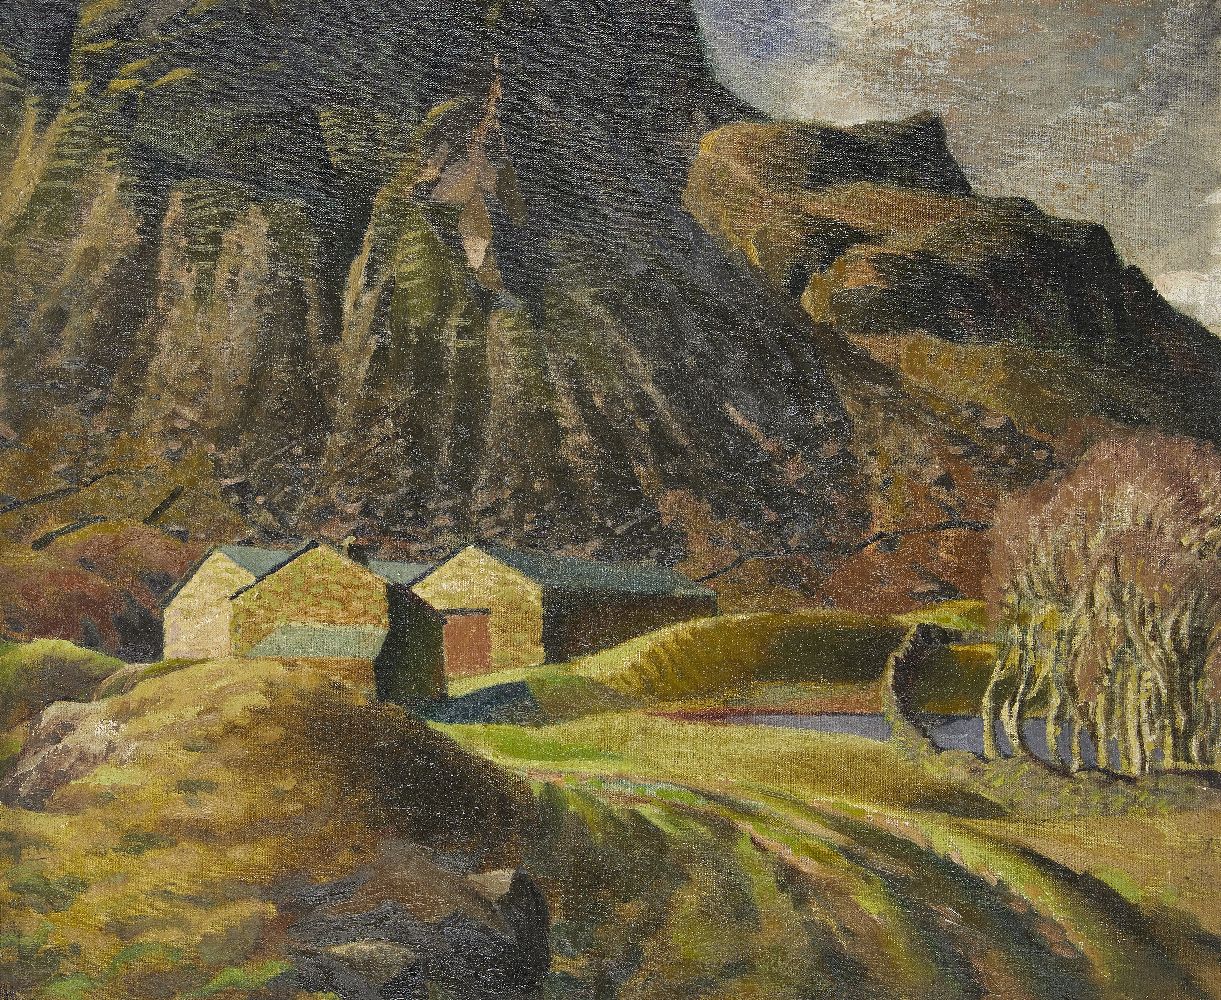 Bloomsbury School, early-mid 20th century- Upland Farm, c.1920; oil on canvas, 51x61cm Provenance: